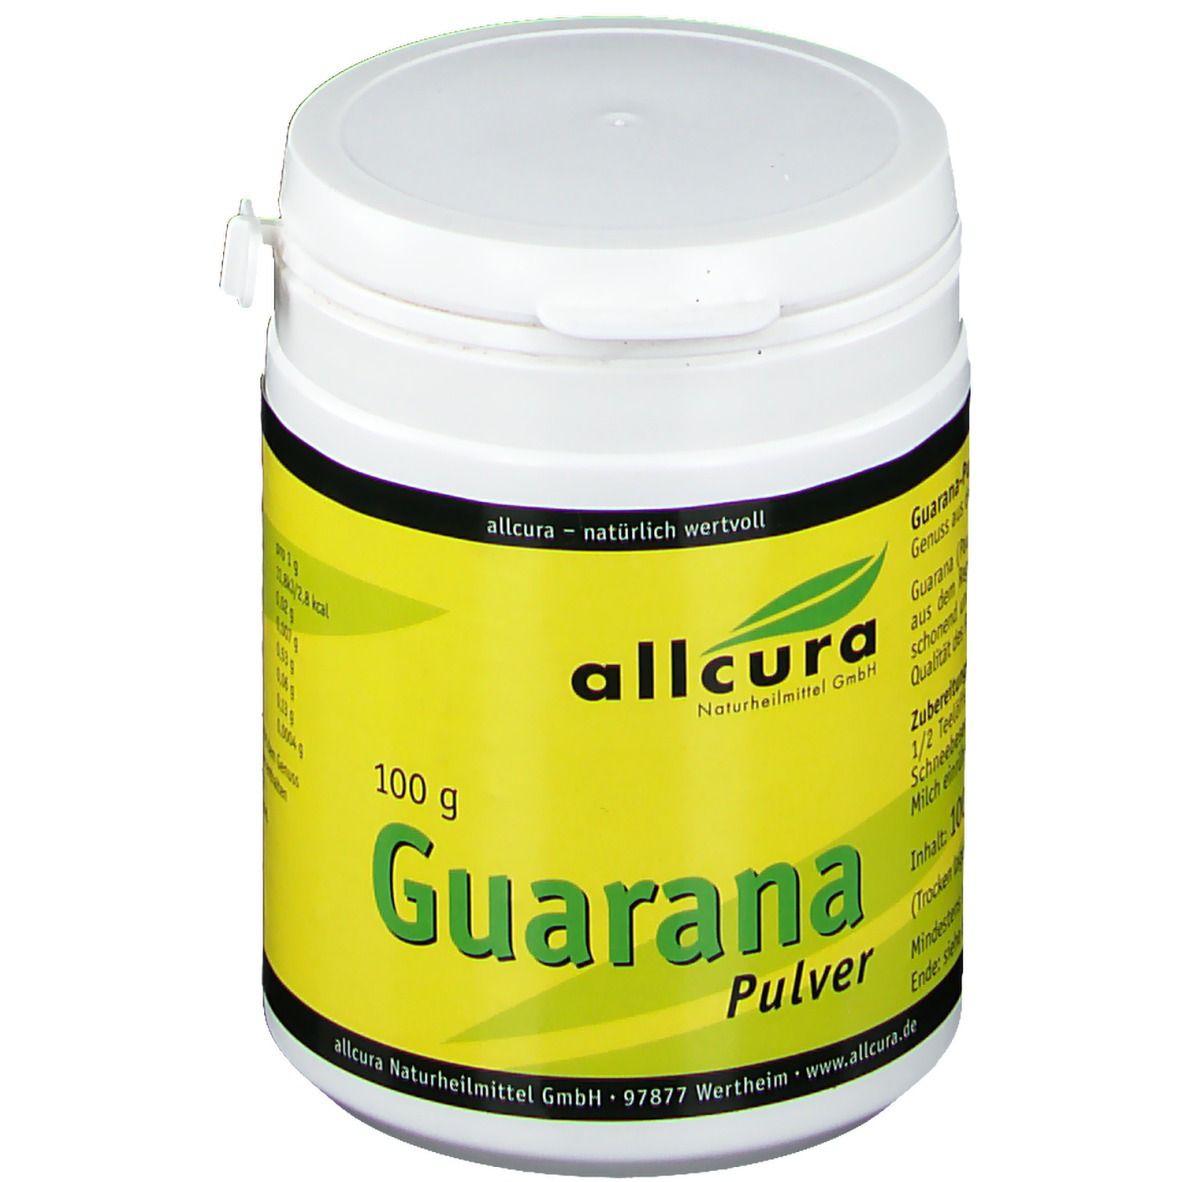 allcura Guarana Pulver